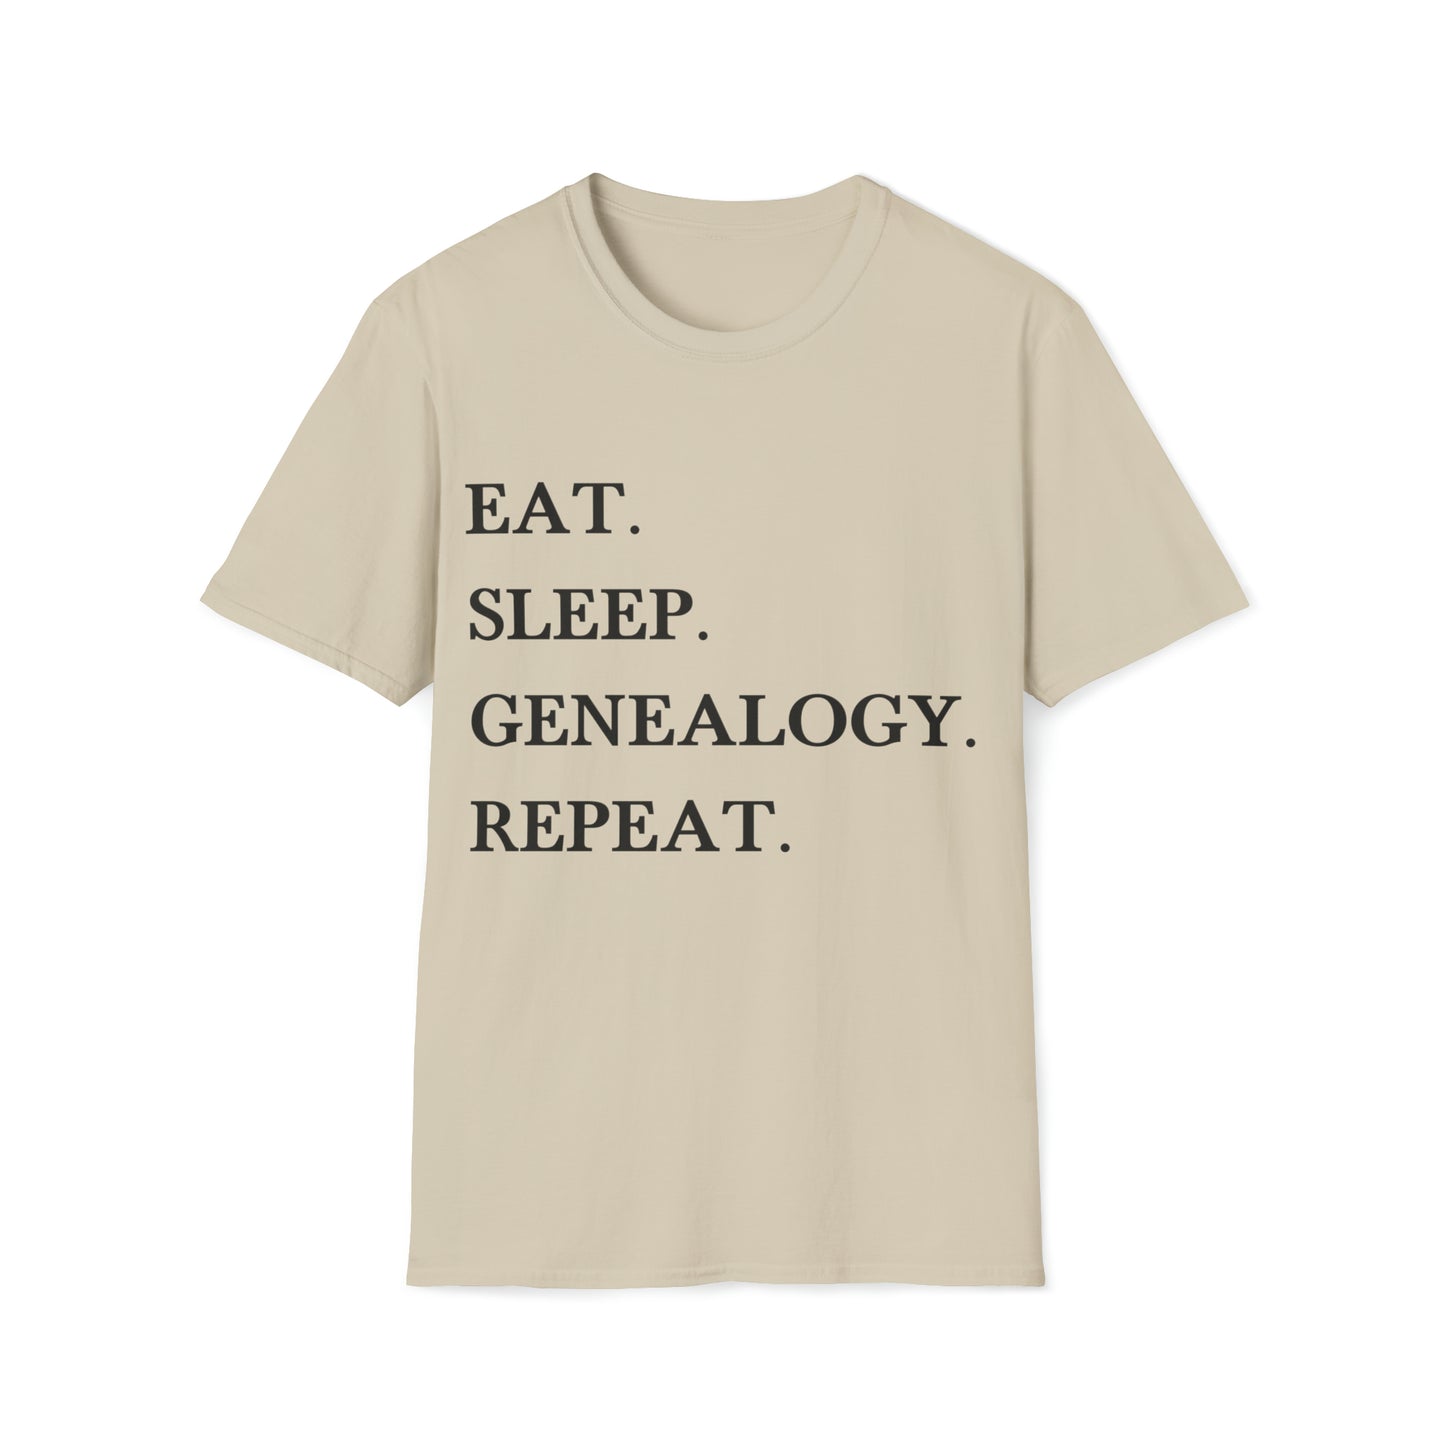 Eat. Sleep. Genealogy. Repeat. T-Shirt